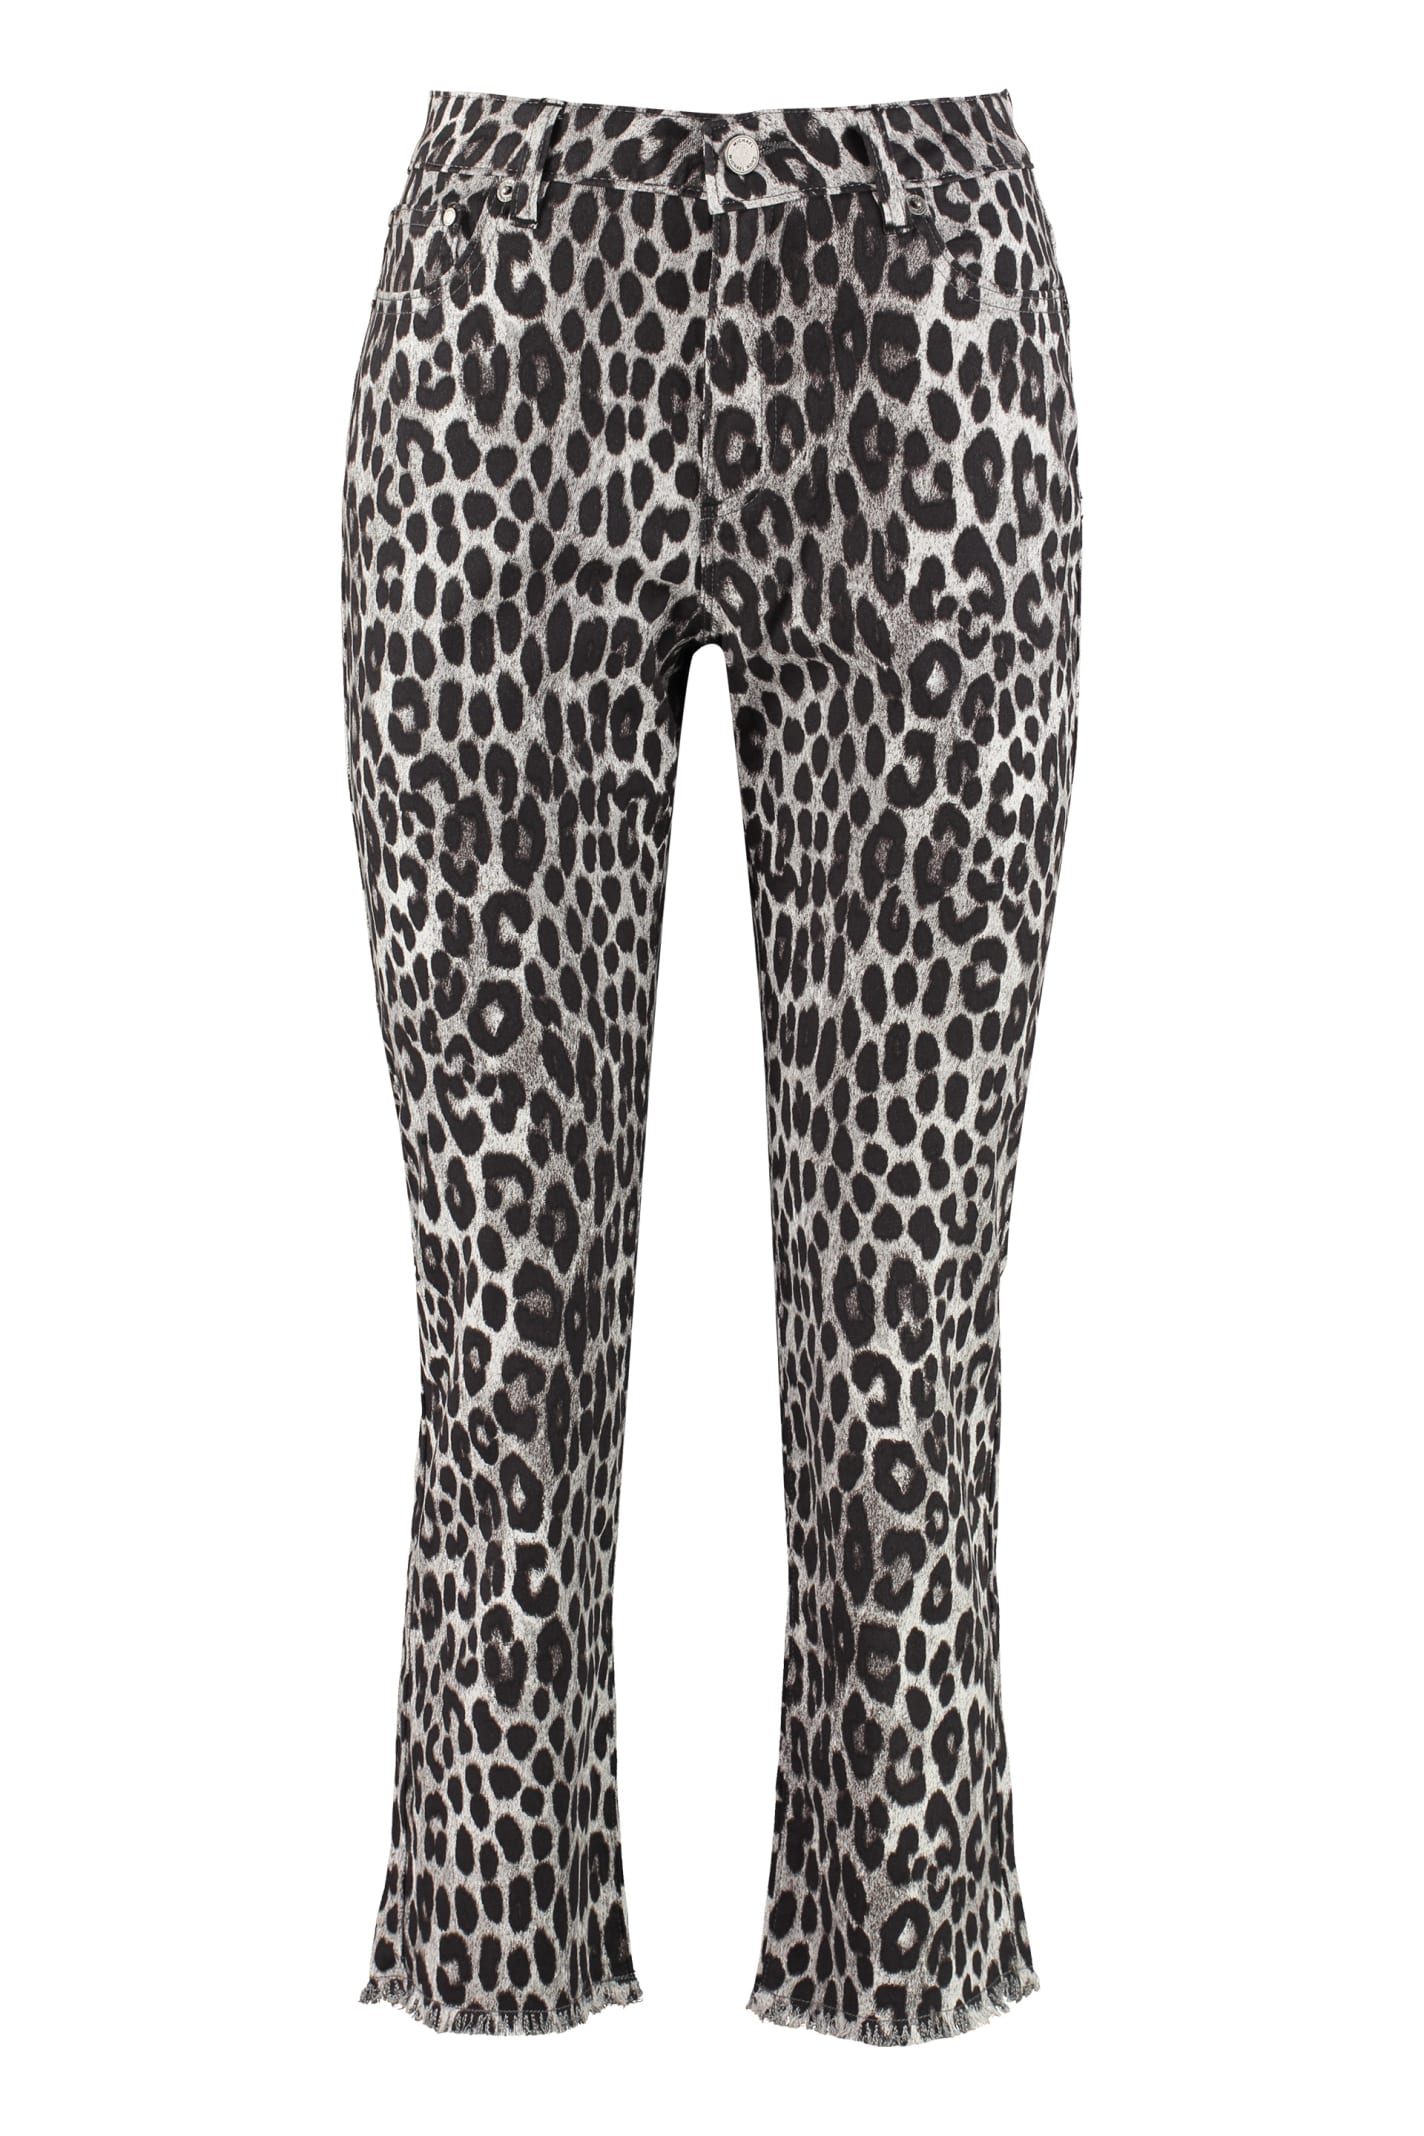 MICHAEL Michael Kors Leopard Print Cropped Jeans